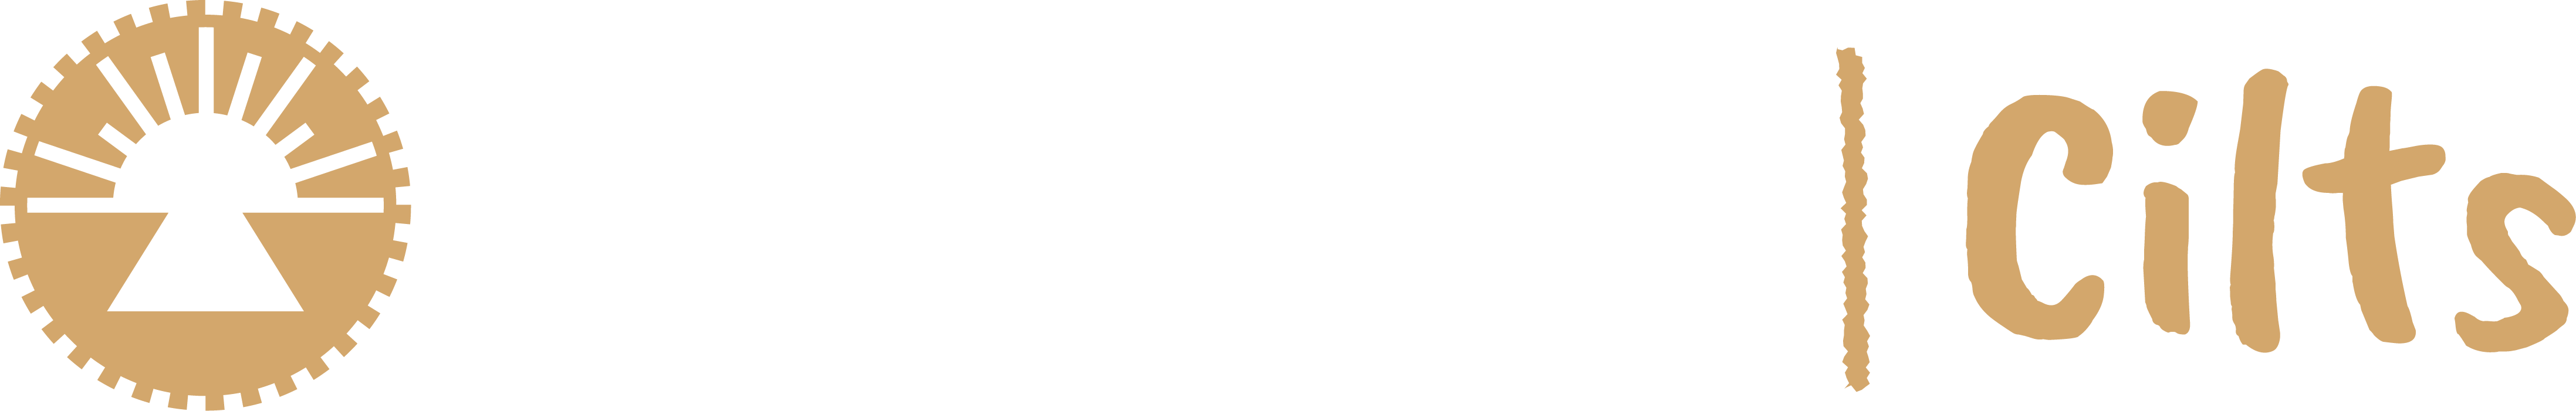 OUTDURO-Cilts-Logo-Light